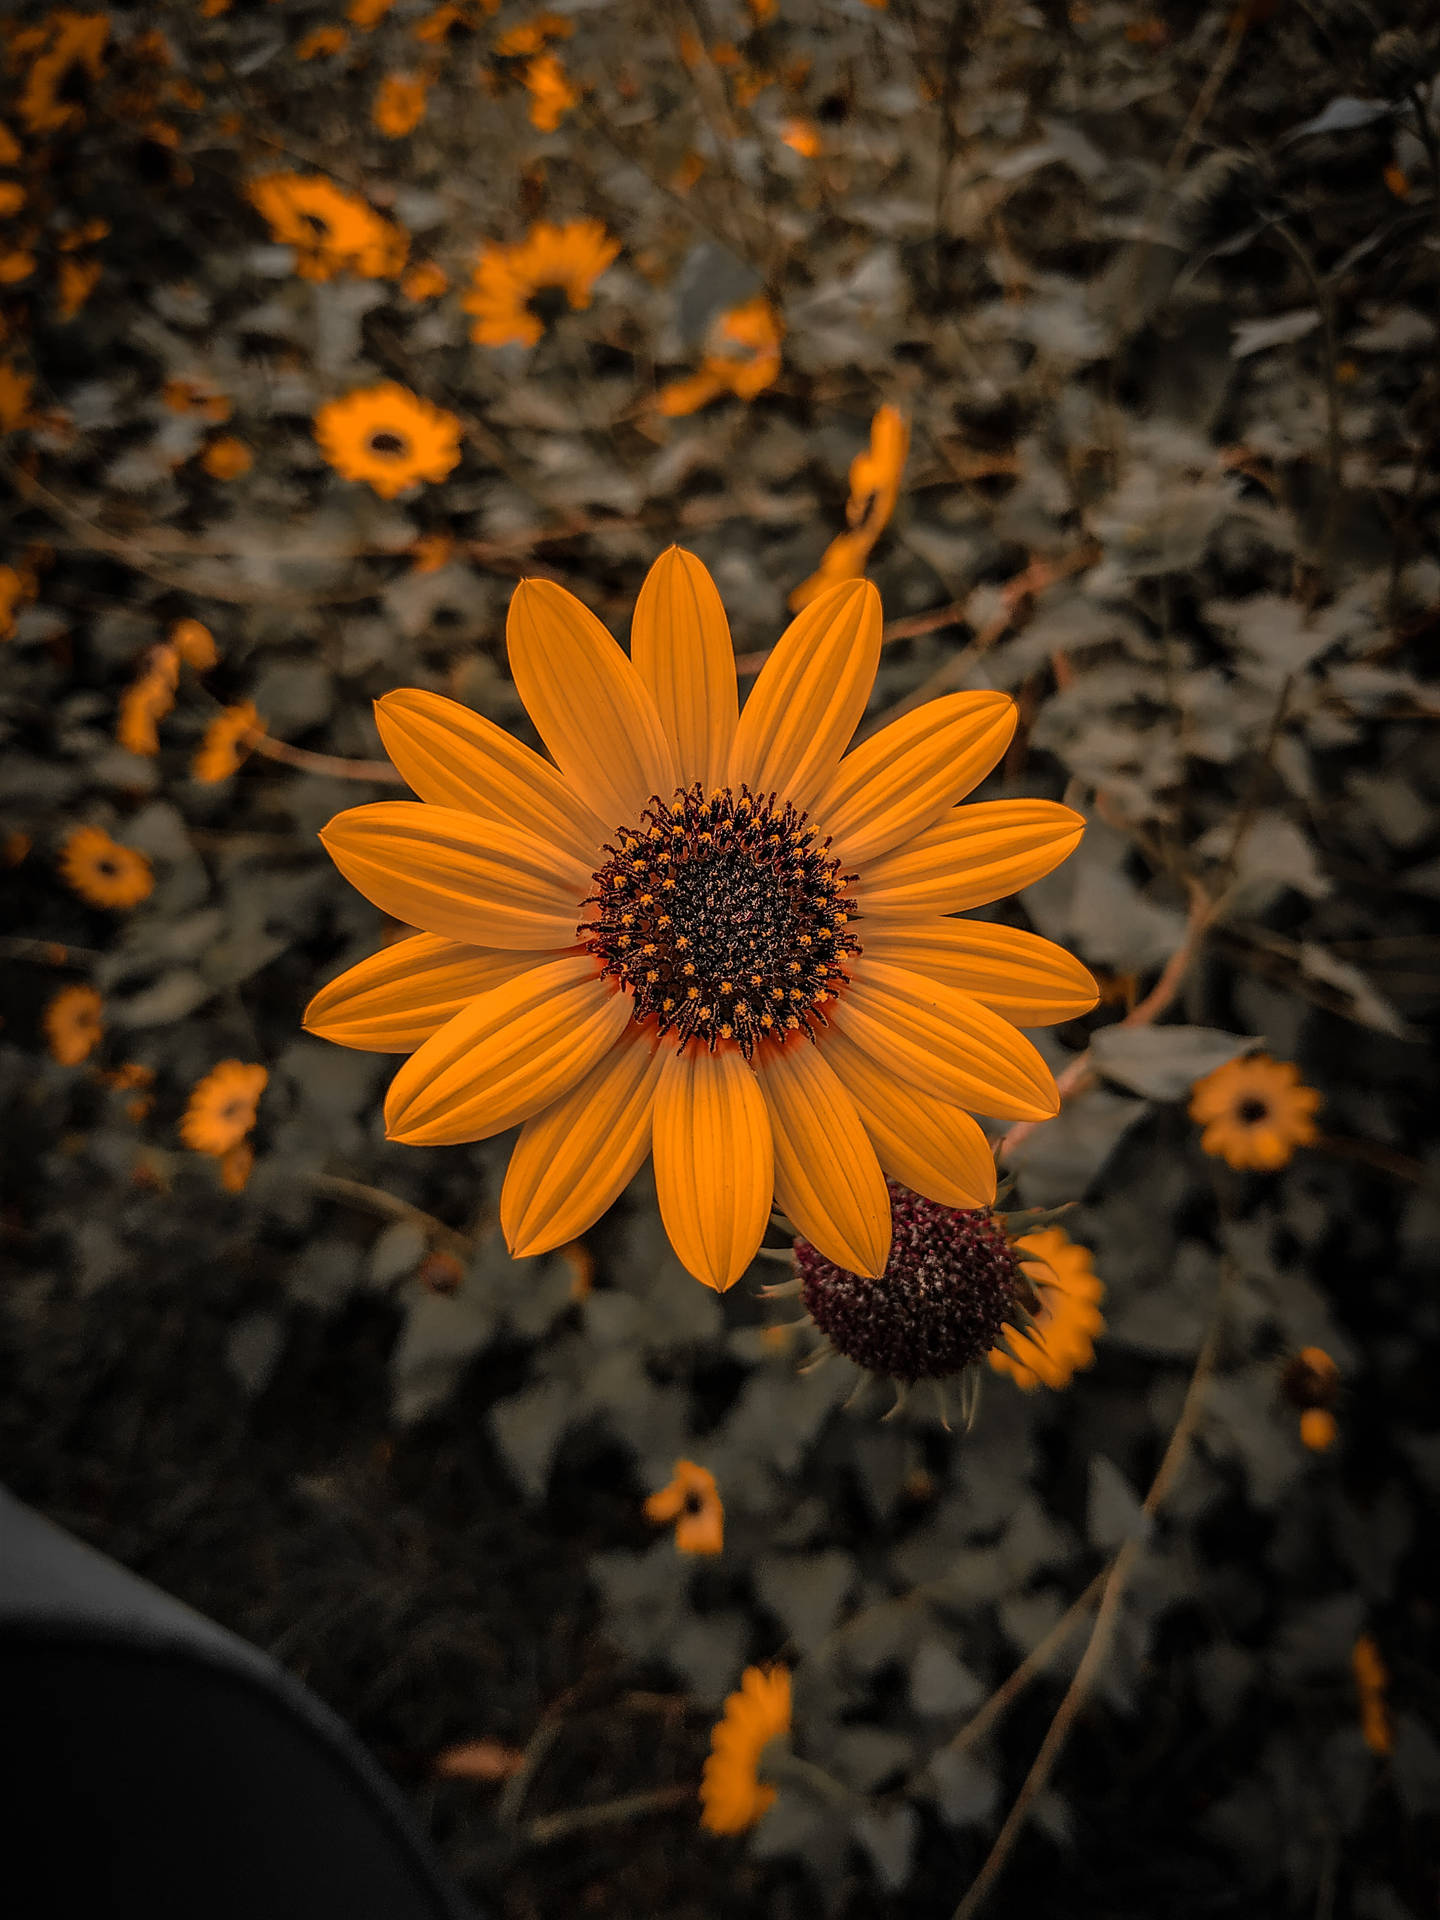 Cute Common Sunflower iPhone X Nature Wallpaper